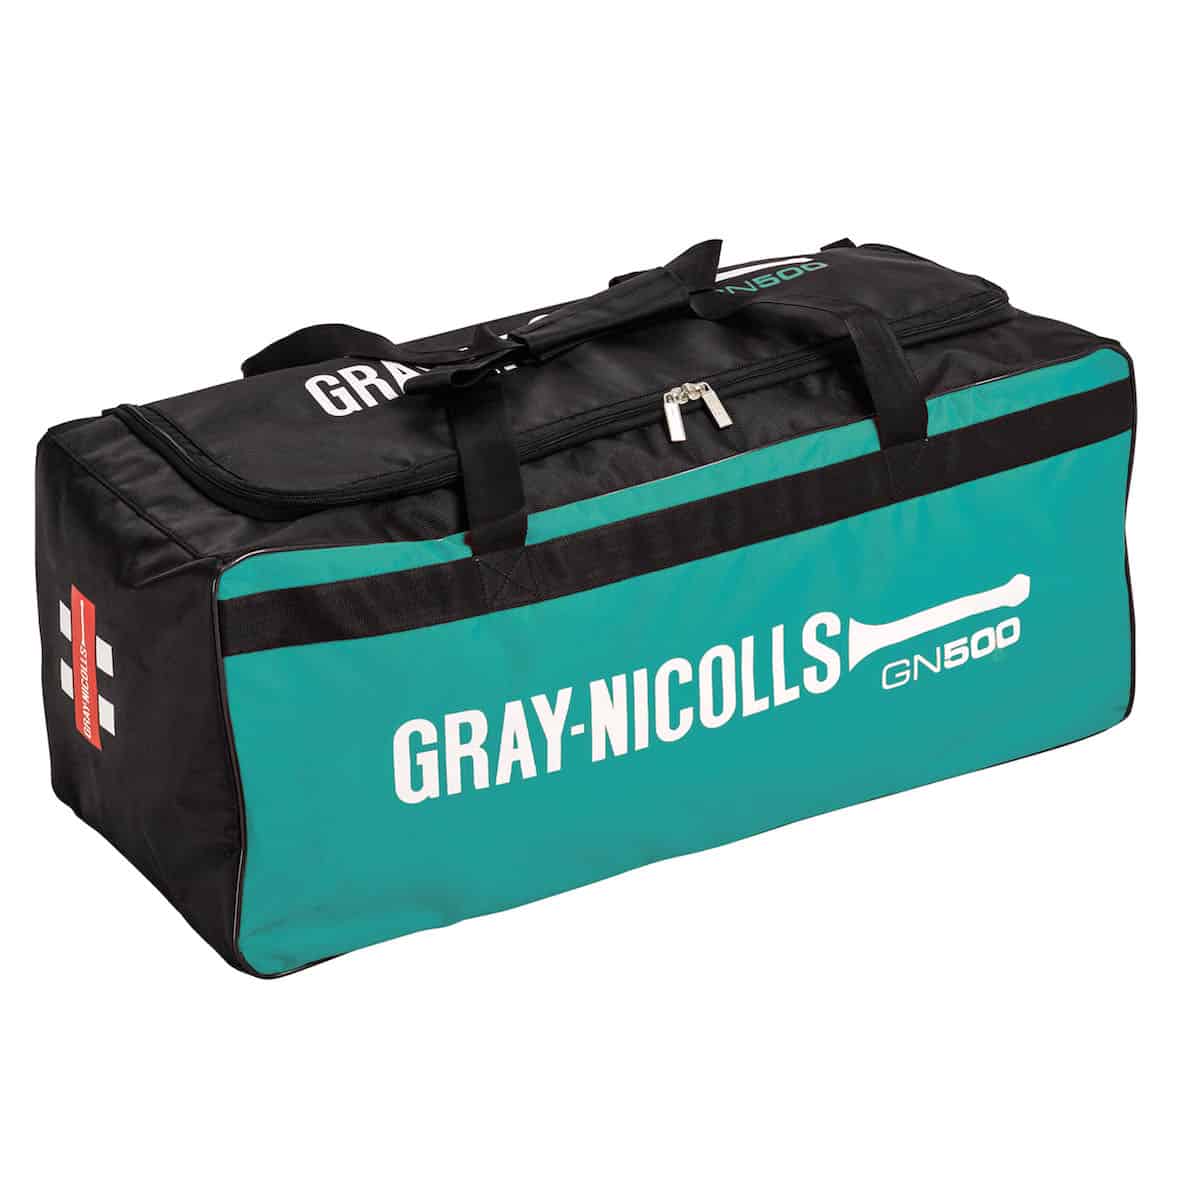 Gray Nicolls GN500 Bag - Meulemans Cricket Centre